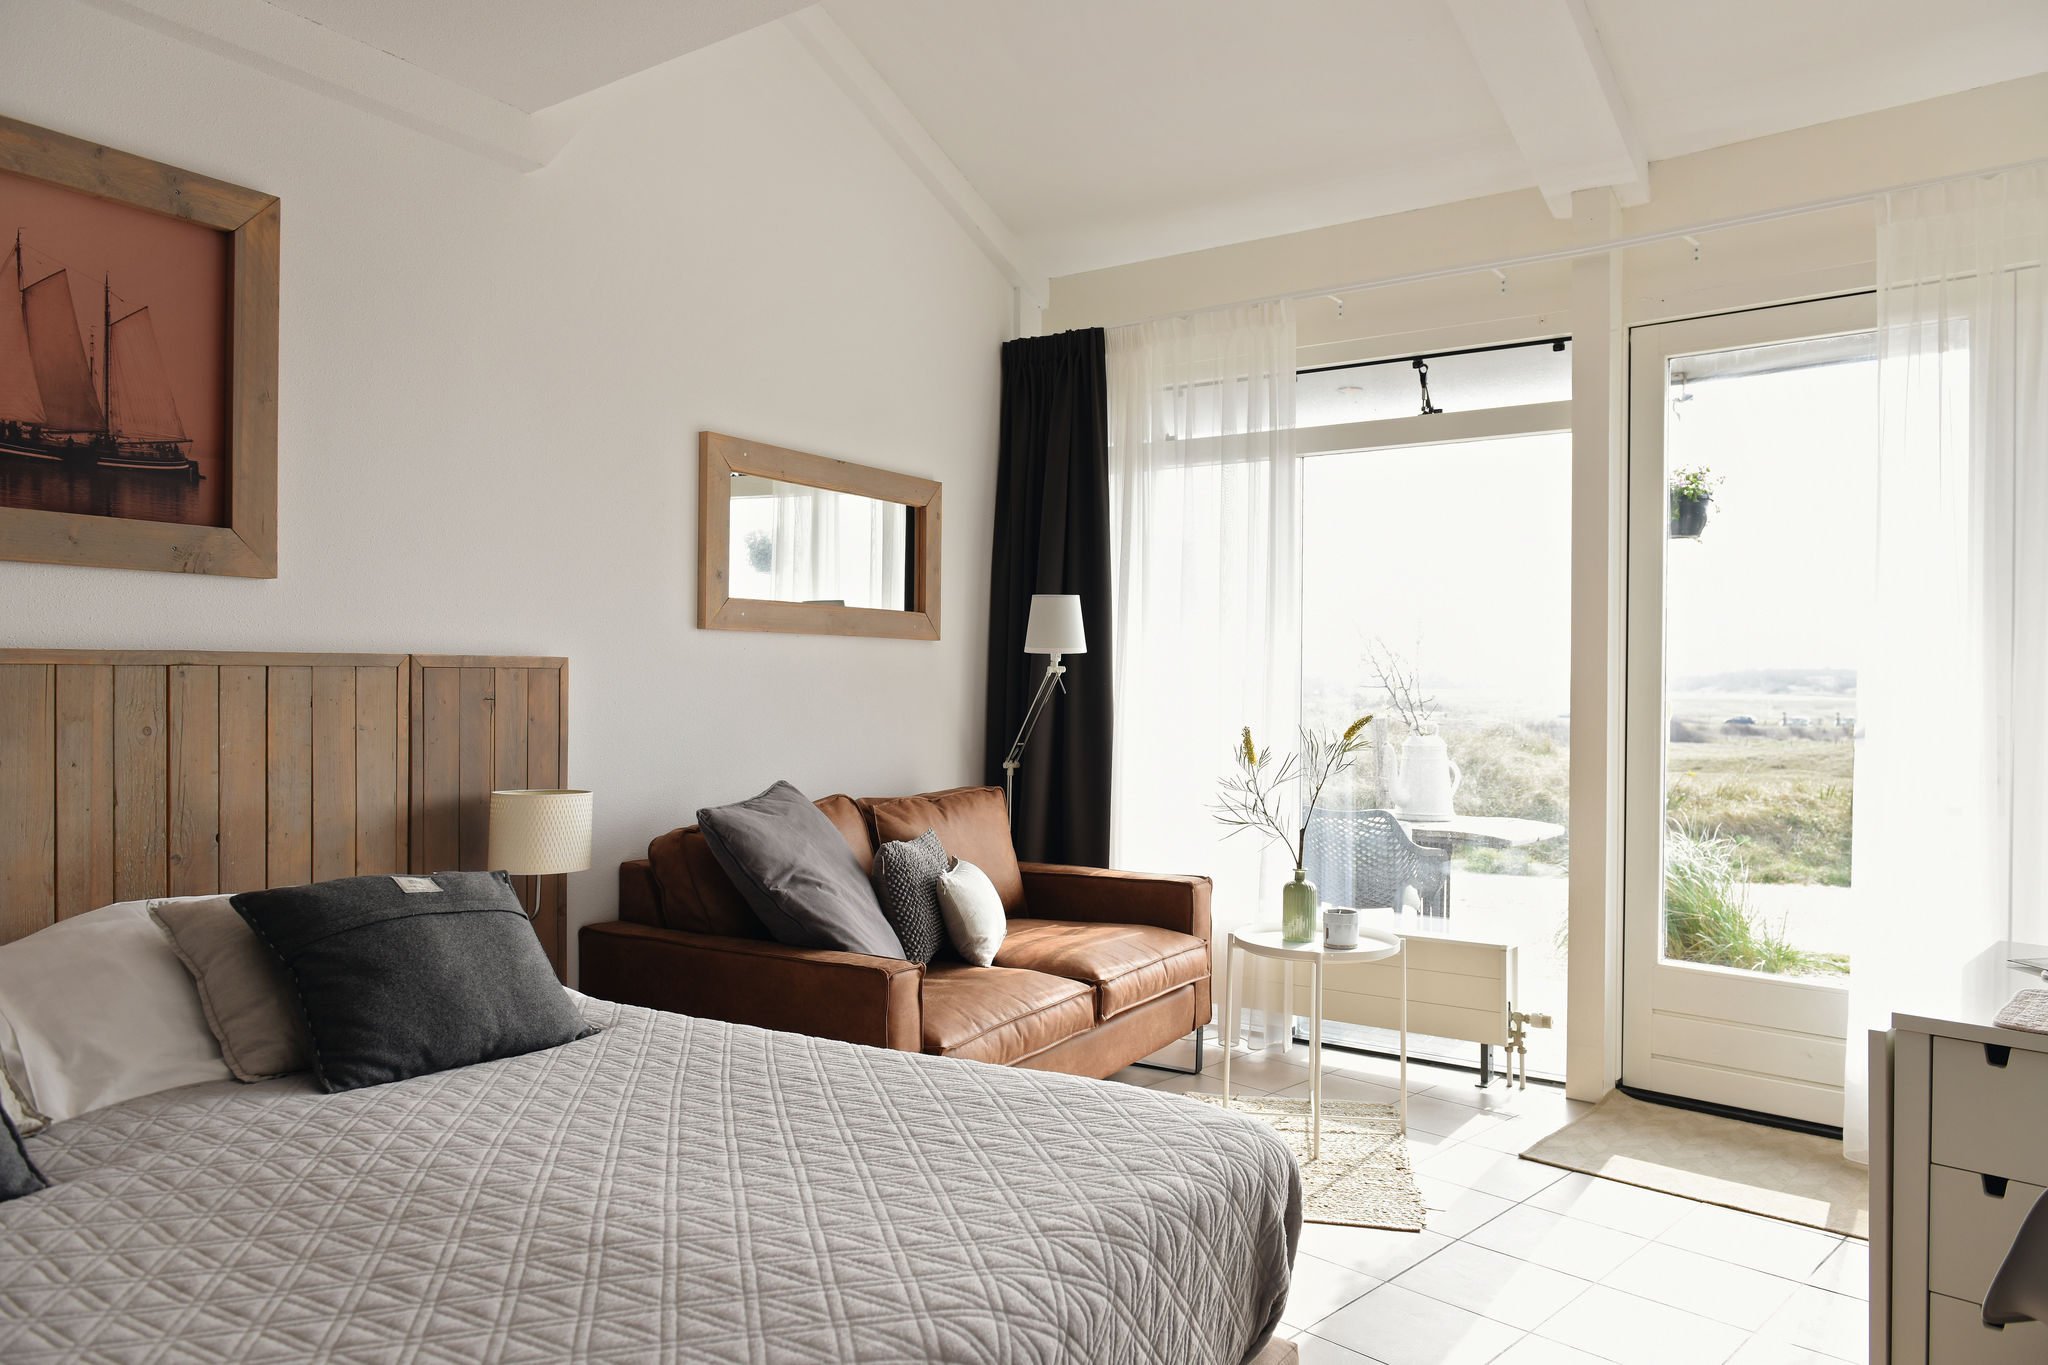 Moderne suites op loopafstand van strand en centrum van Callantsoog.